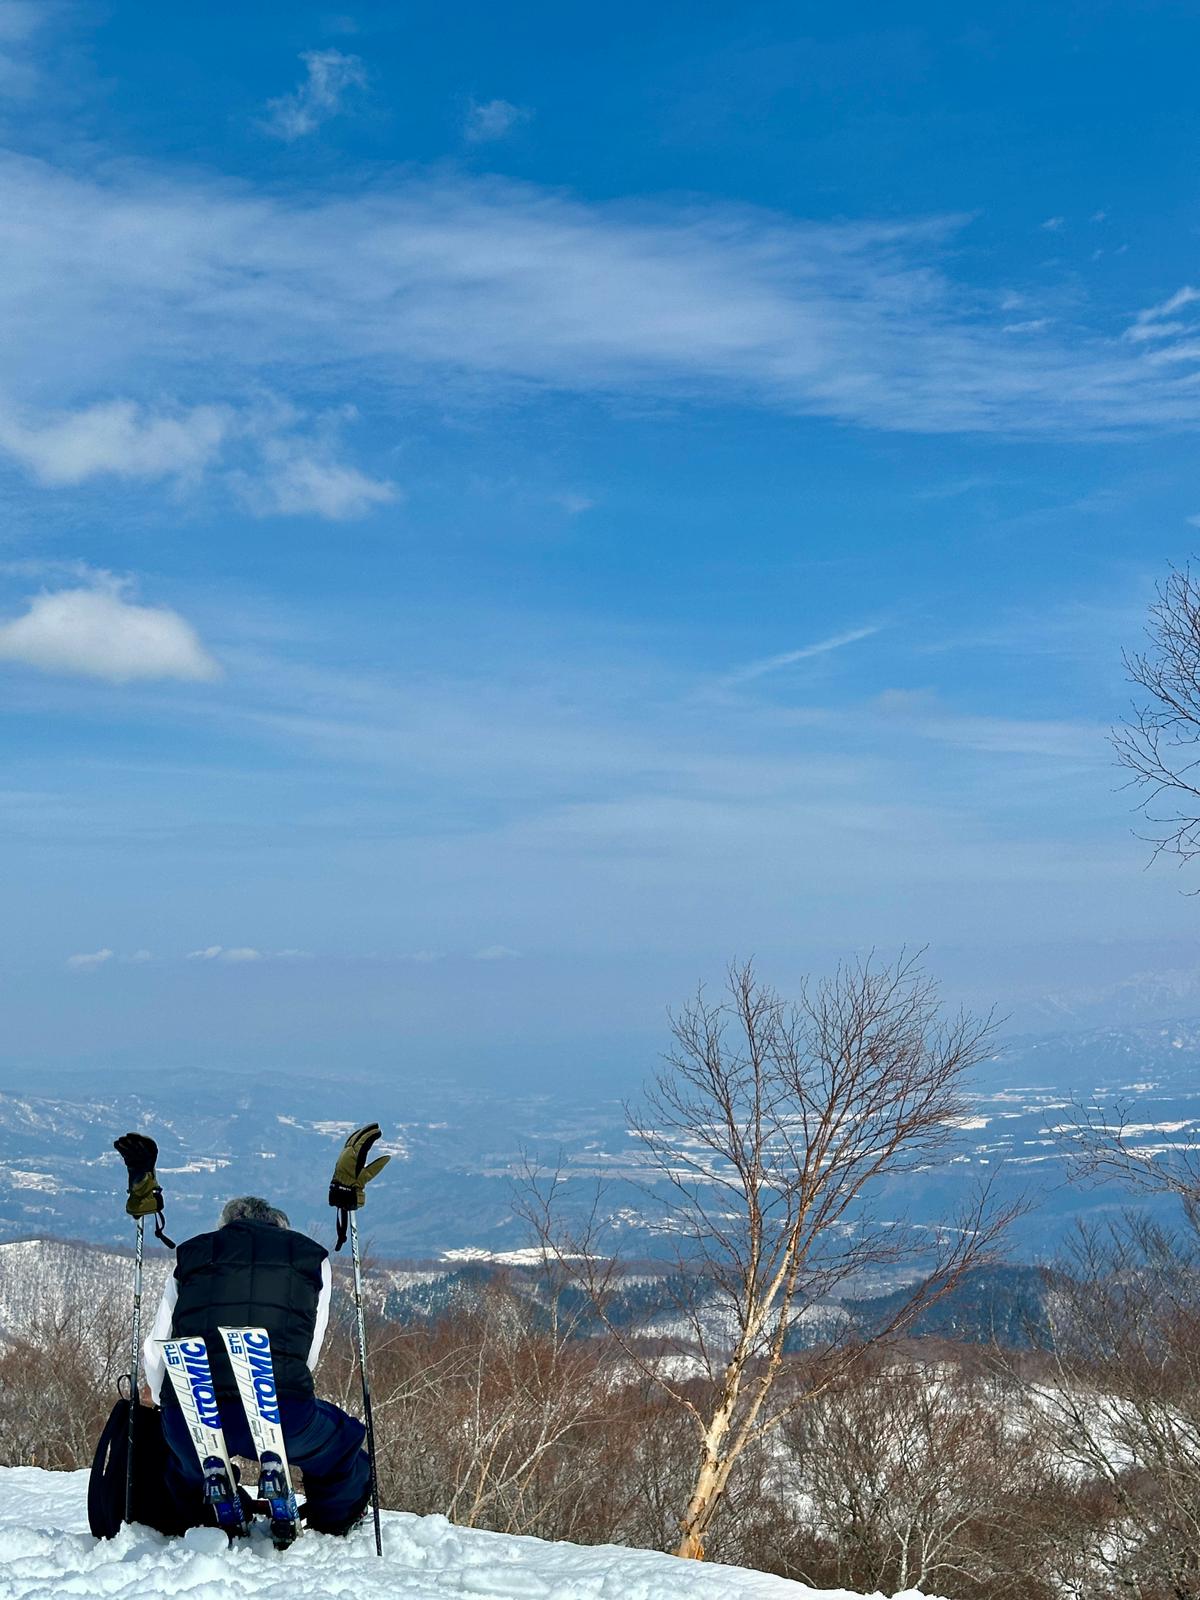 skiier embracing the view on yamibiko